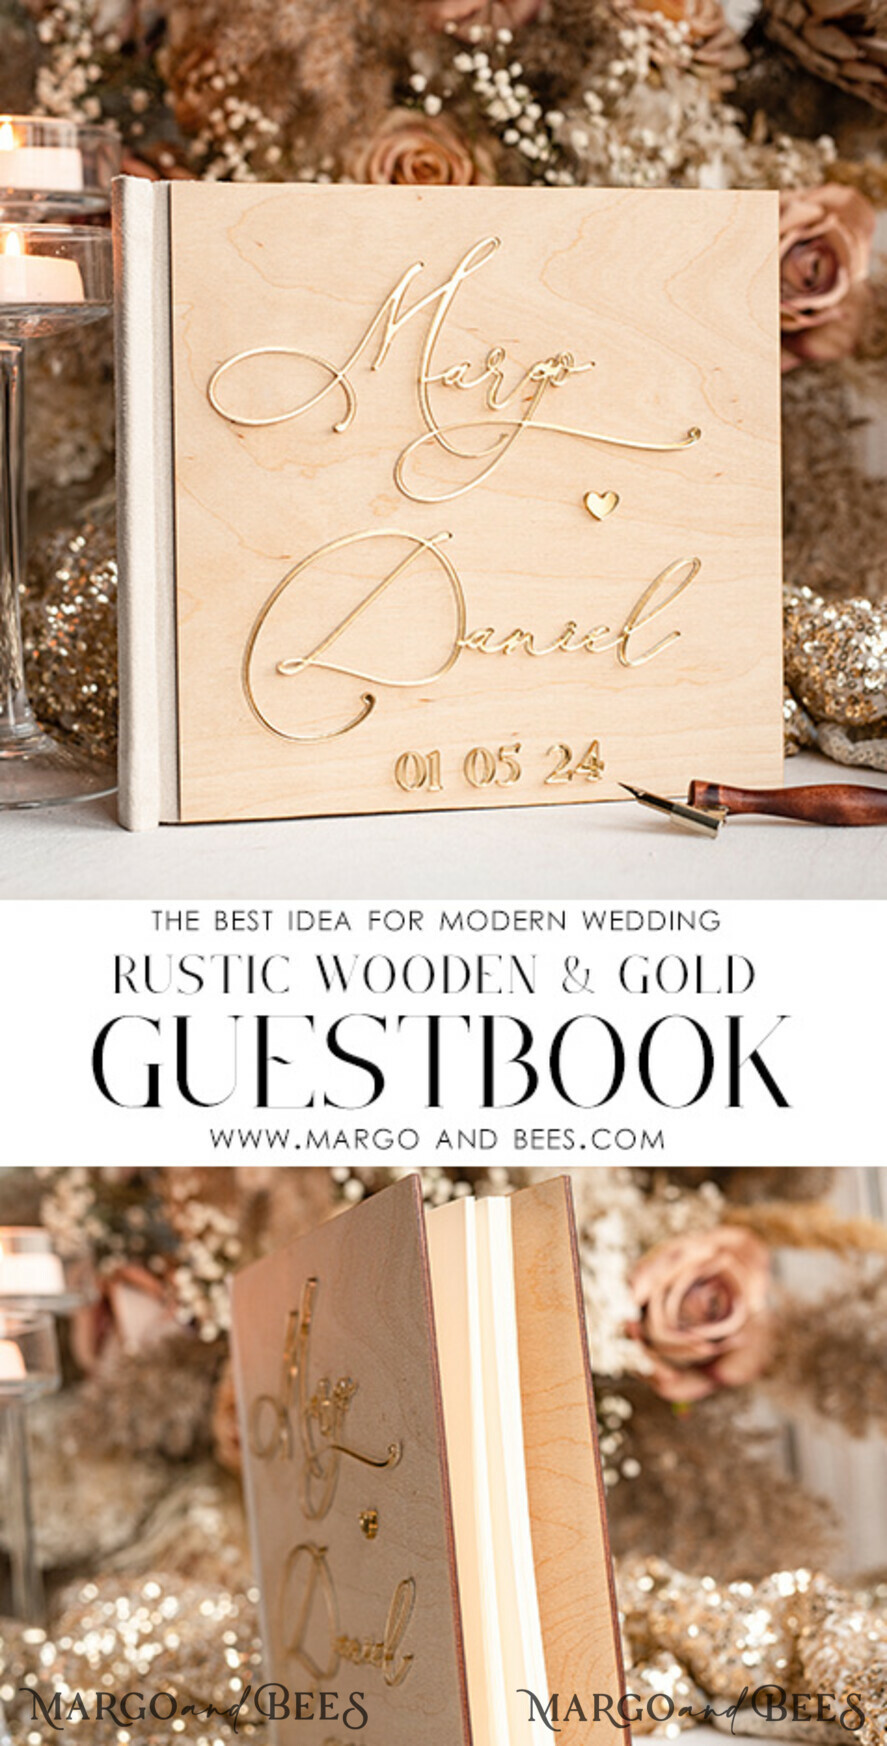 Wooden Memory Book, Personalized Guest book, Custom Album